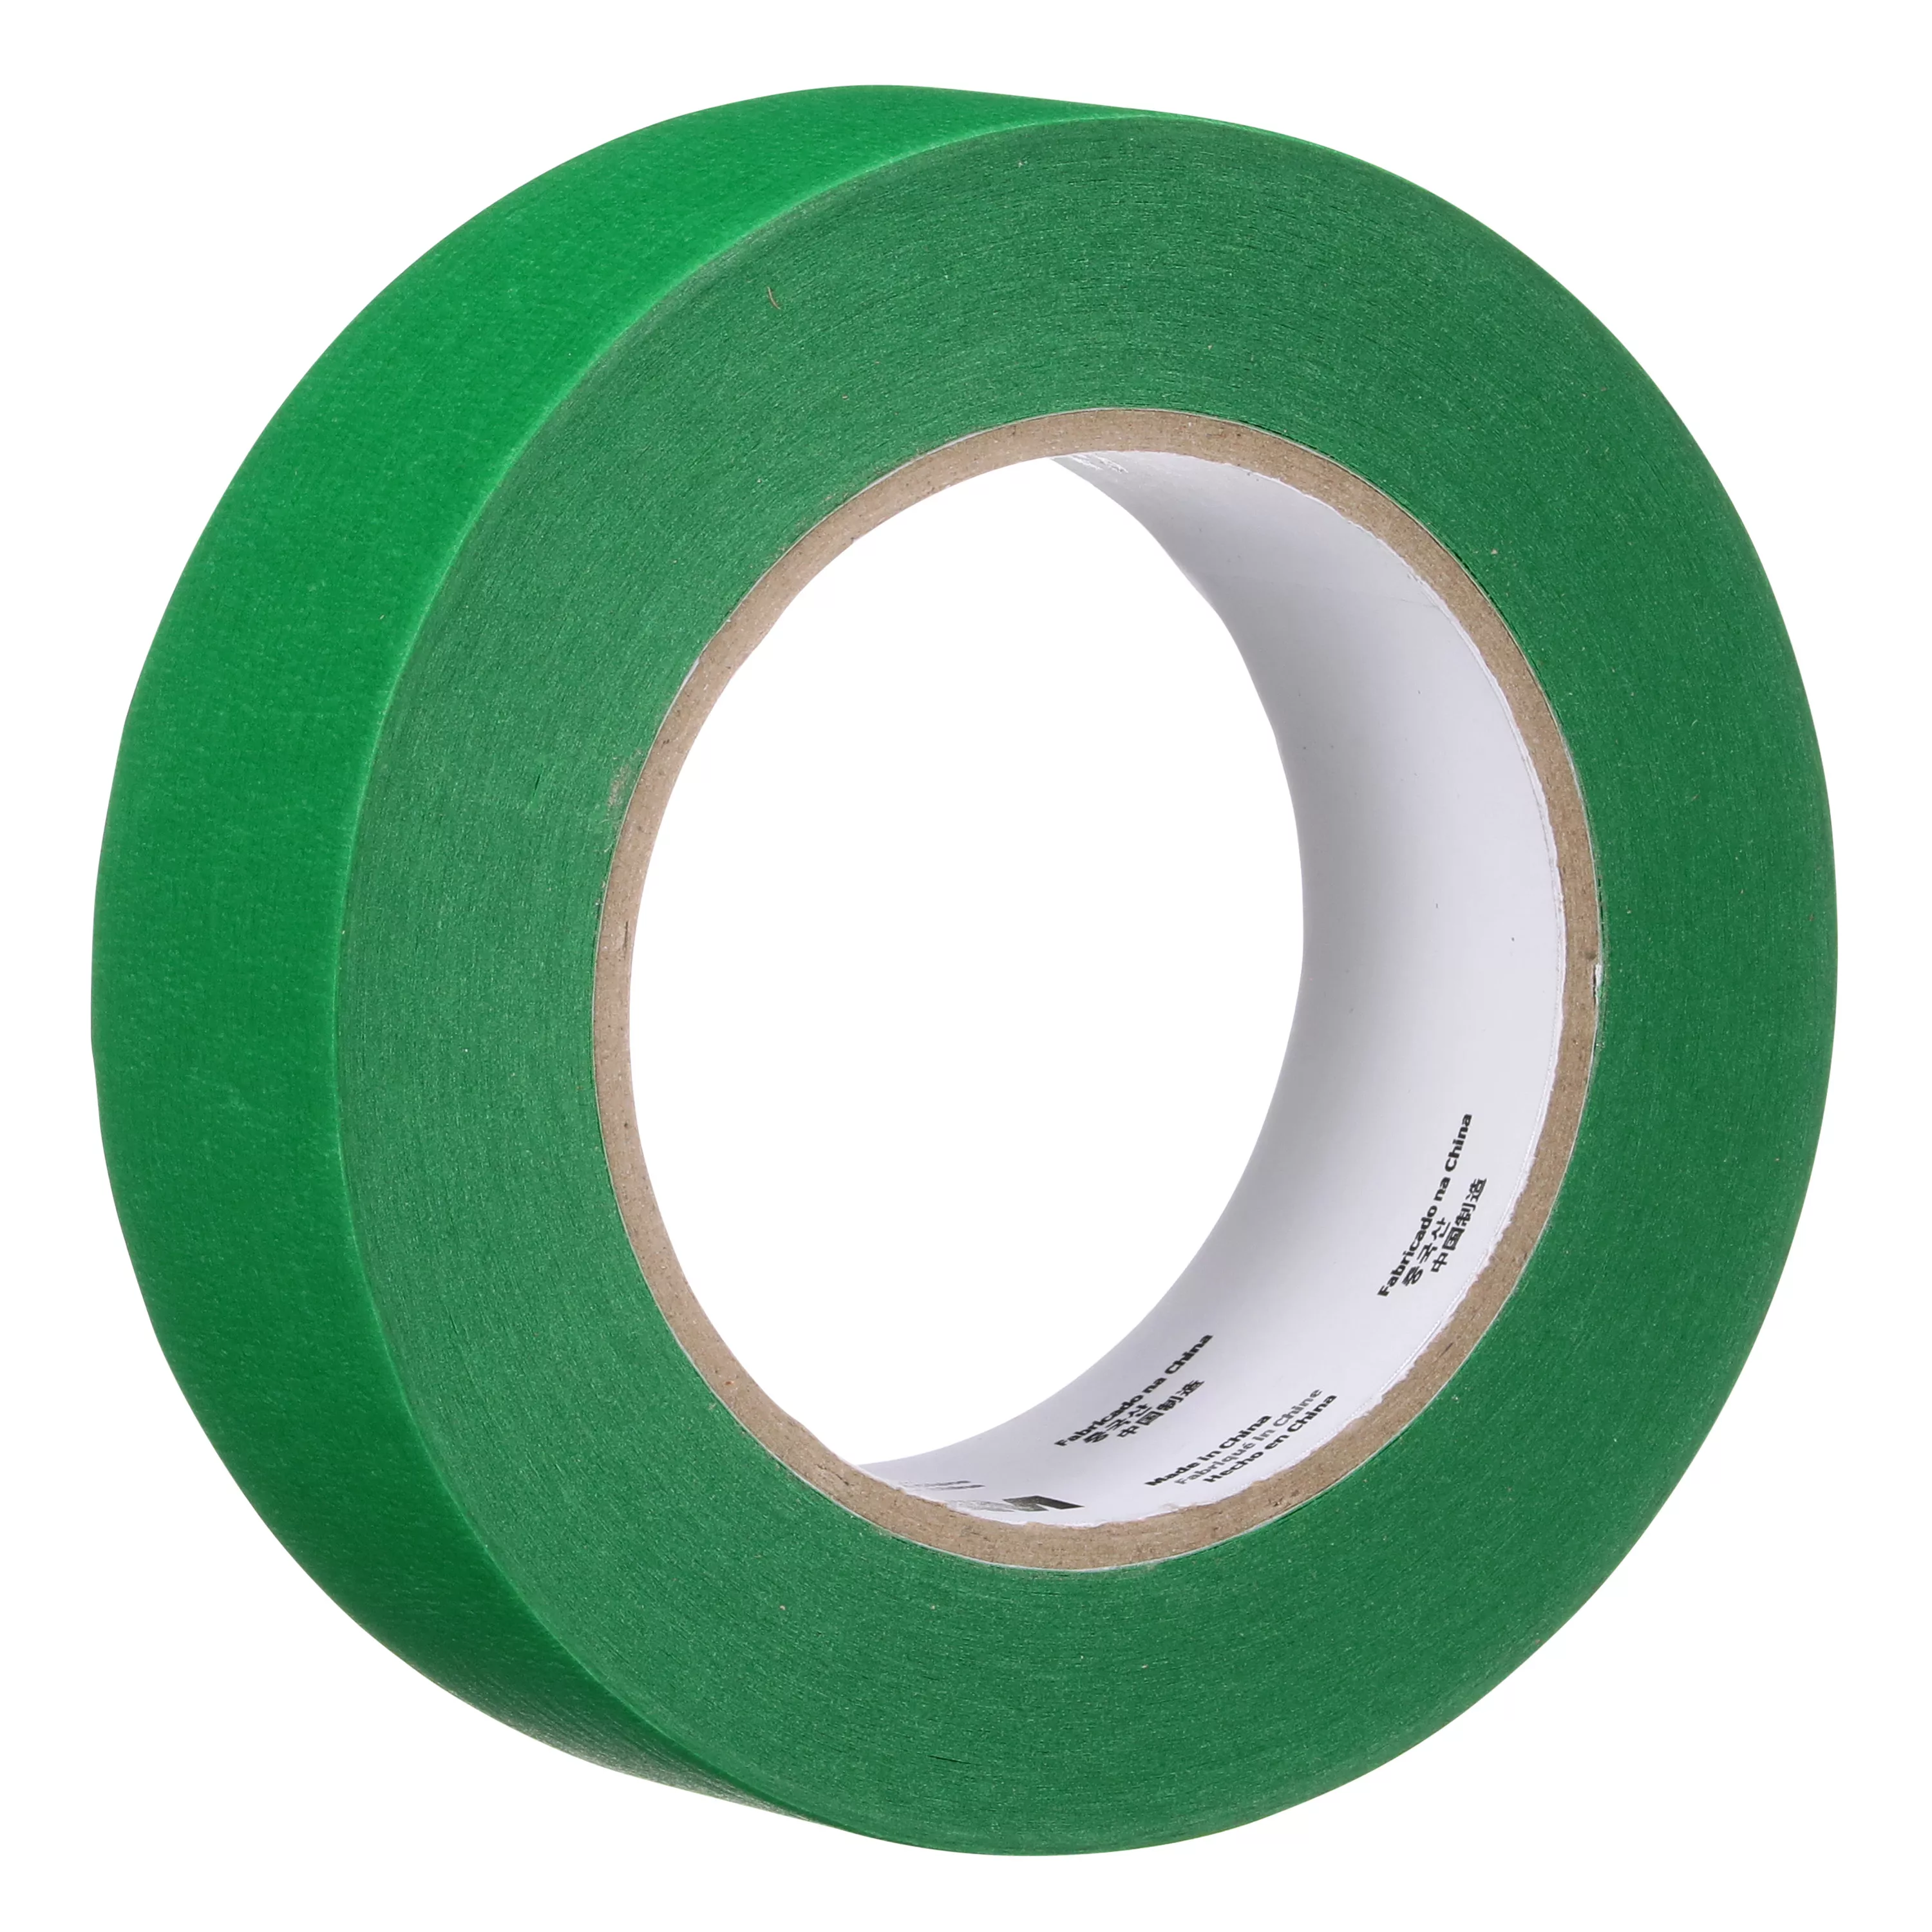 3M™ UV Resistant Green Masking Tape, 36 mm x 55 m, 36 Rolls/Case